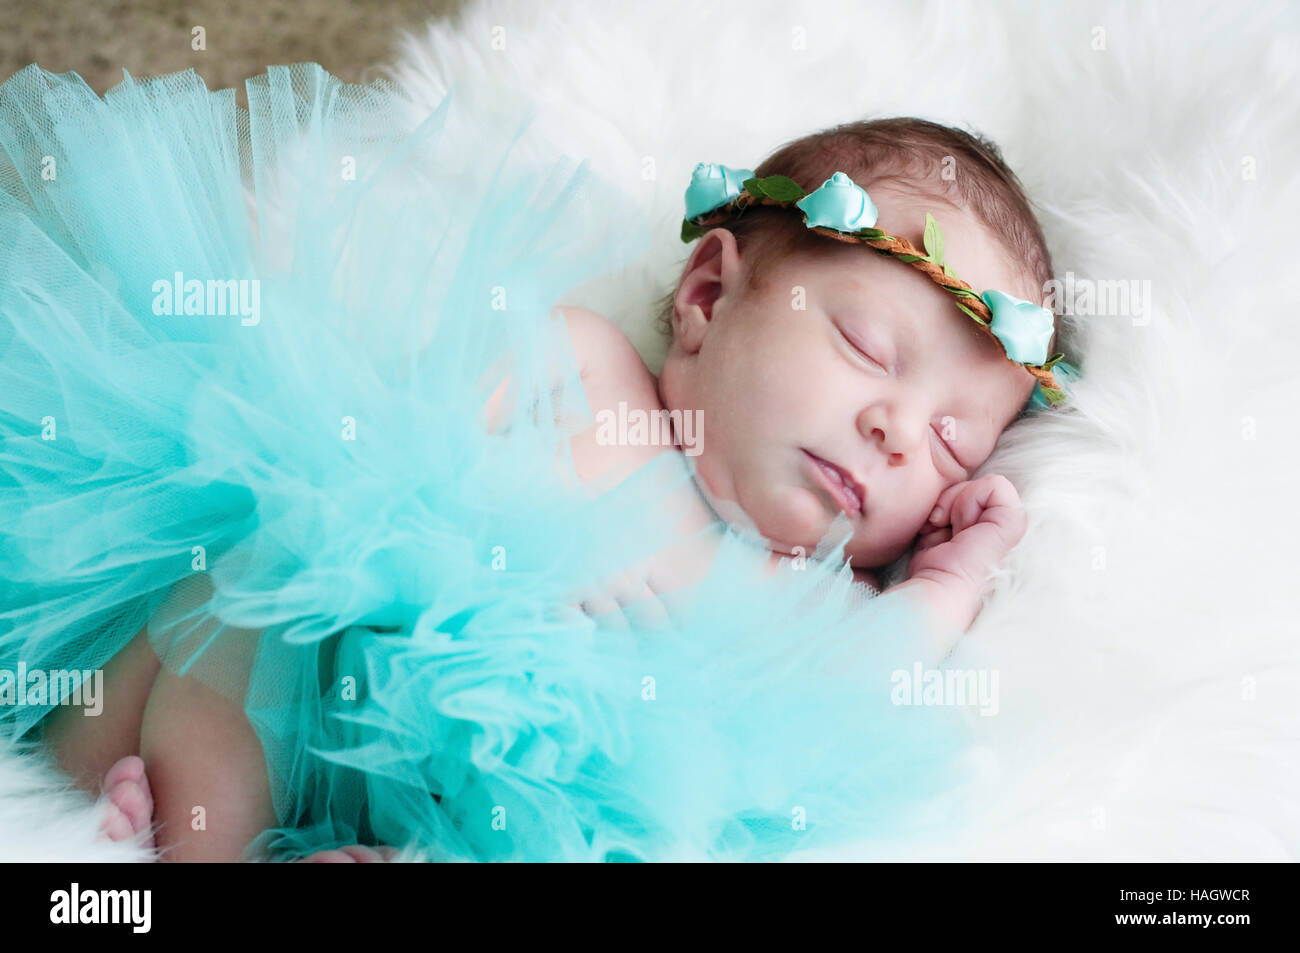 Portrait of adorable newborn baby girl in teal tutu sleeping on white fur. Stock Photo